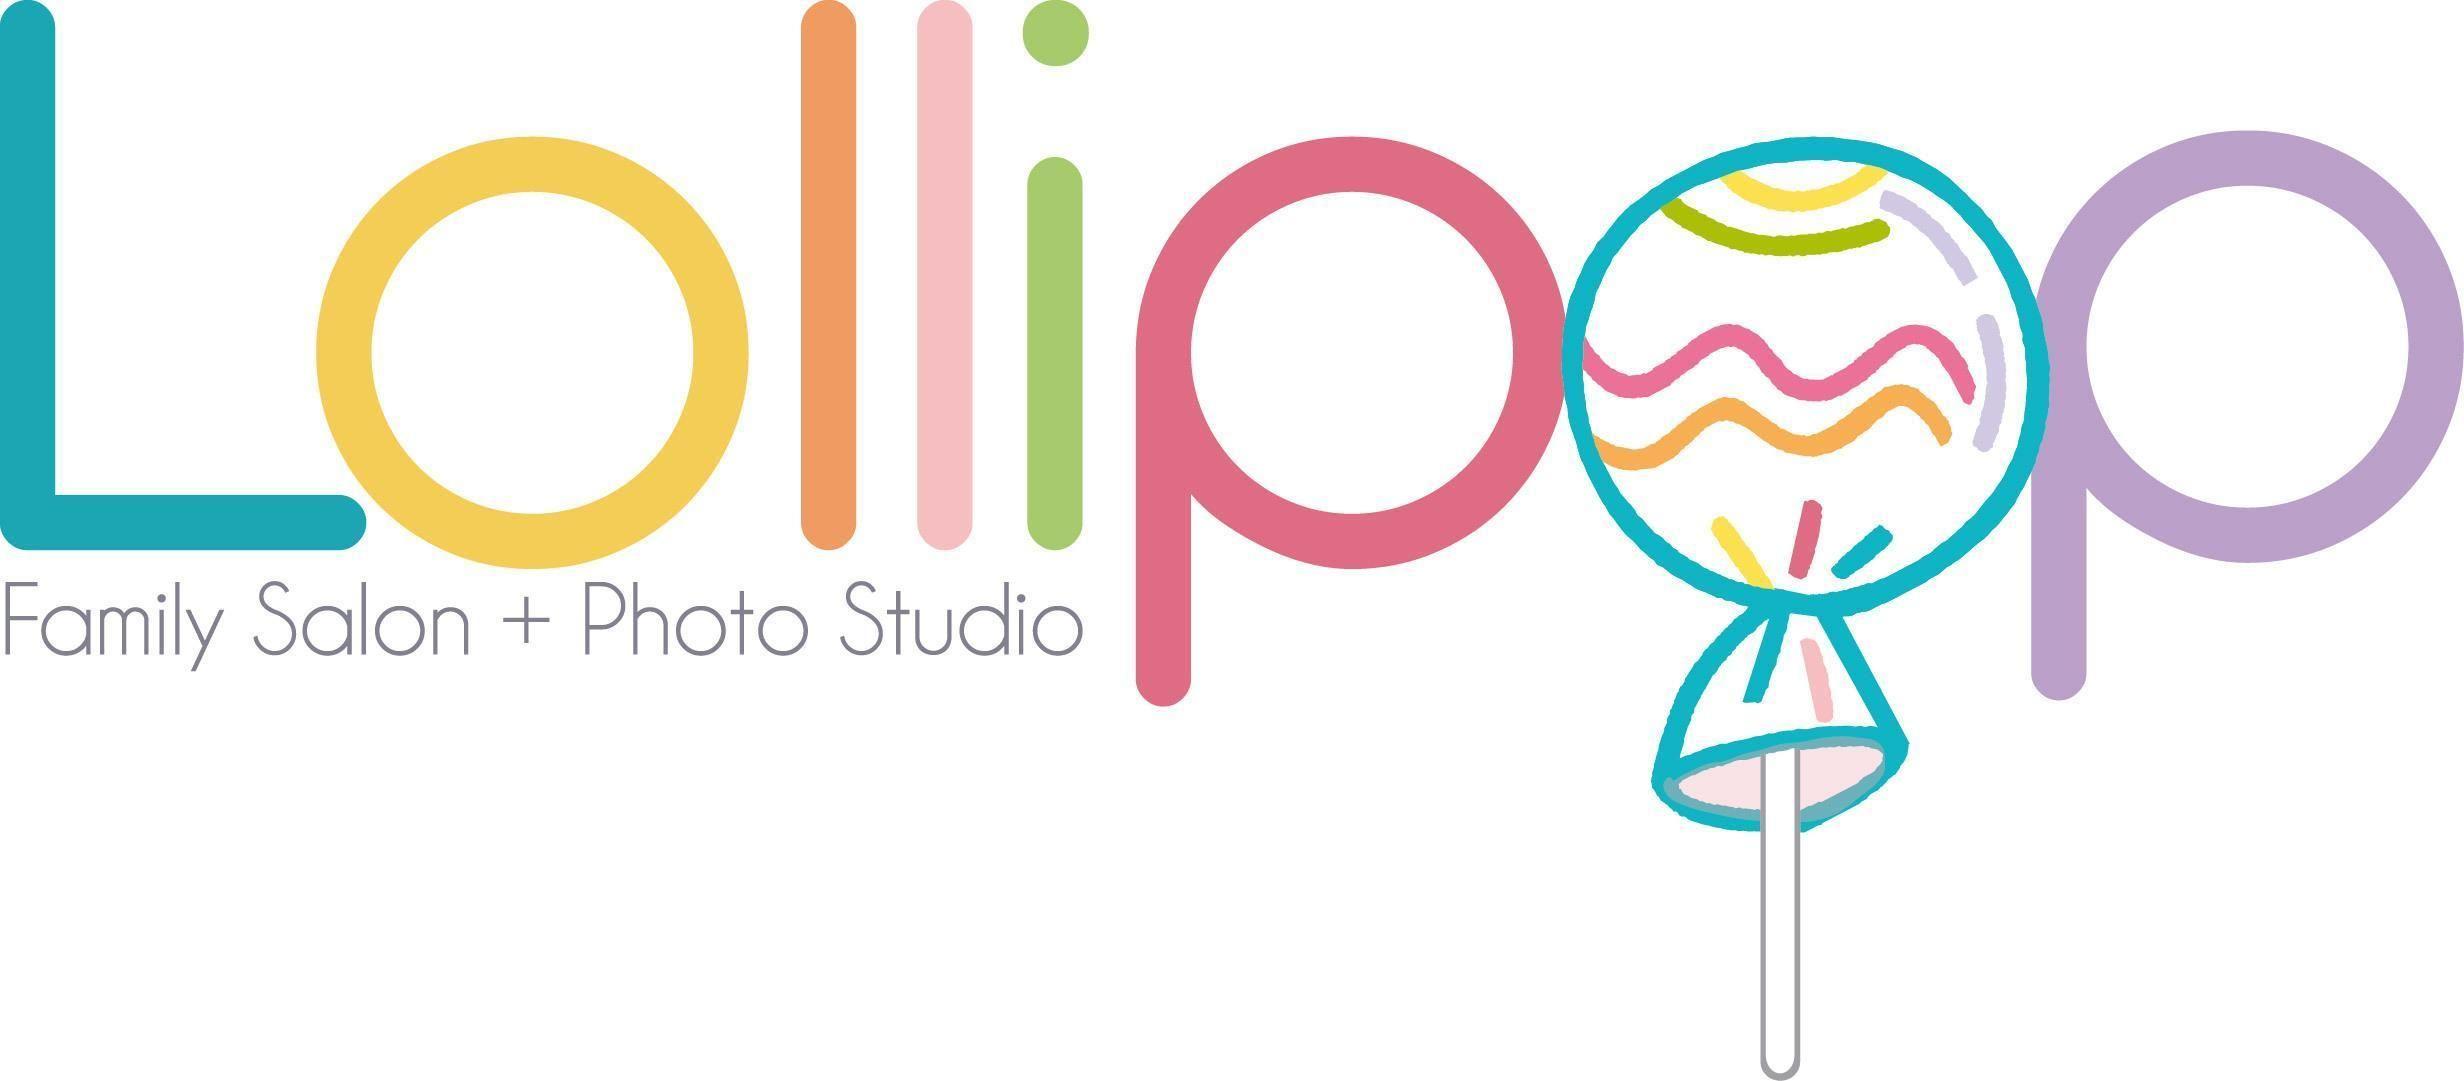 Lollipop Logo - Lollipop Family Salon & Photo Studio, News & Competitors